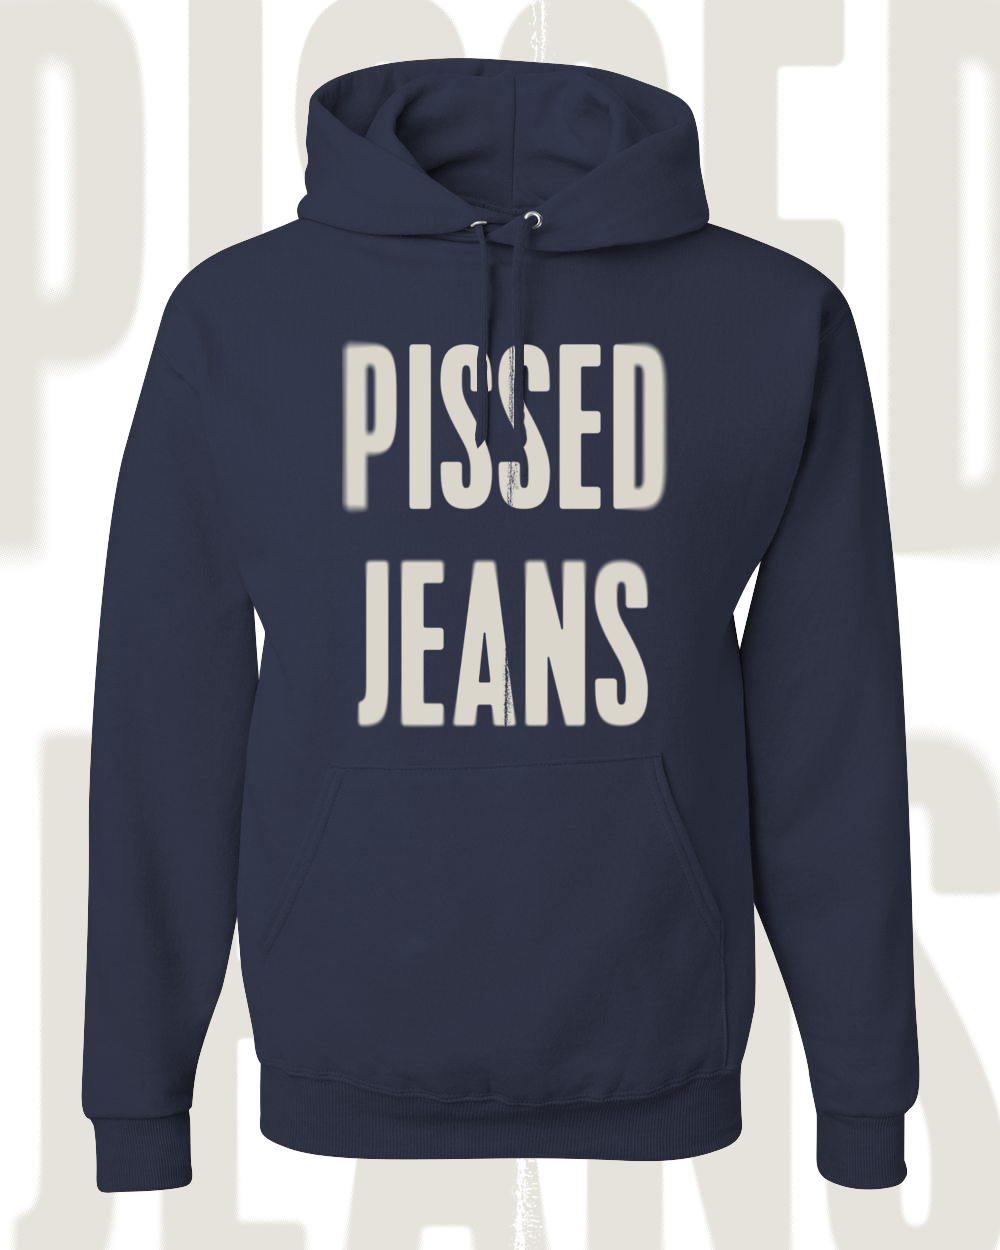 Pissed Jeans - Creased pullover hooded sweatshirt